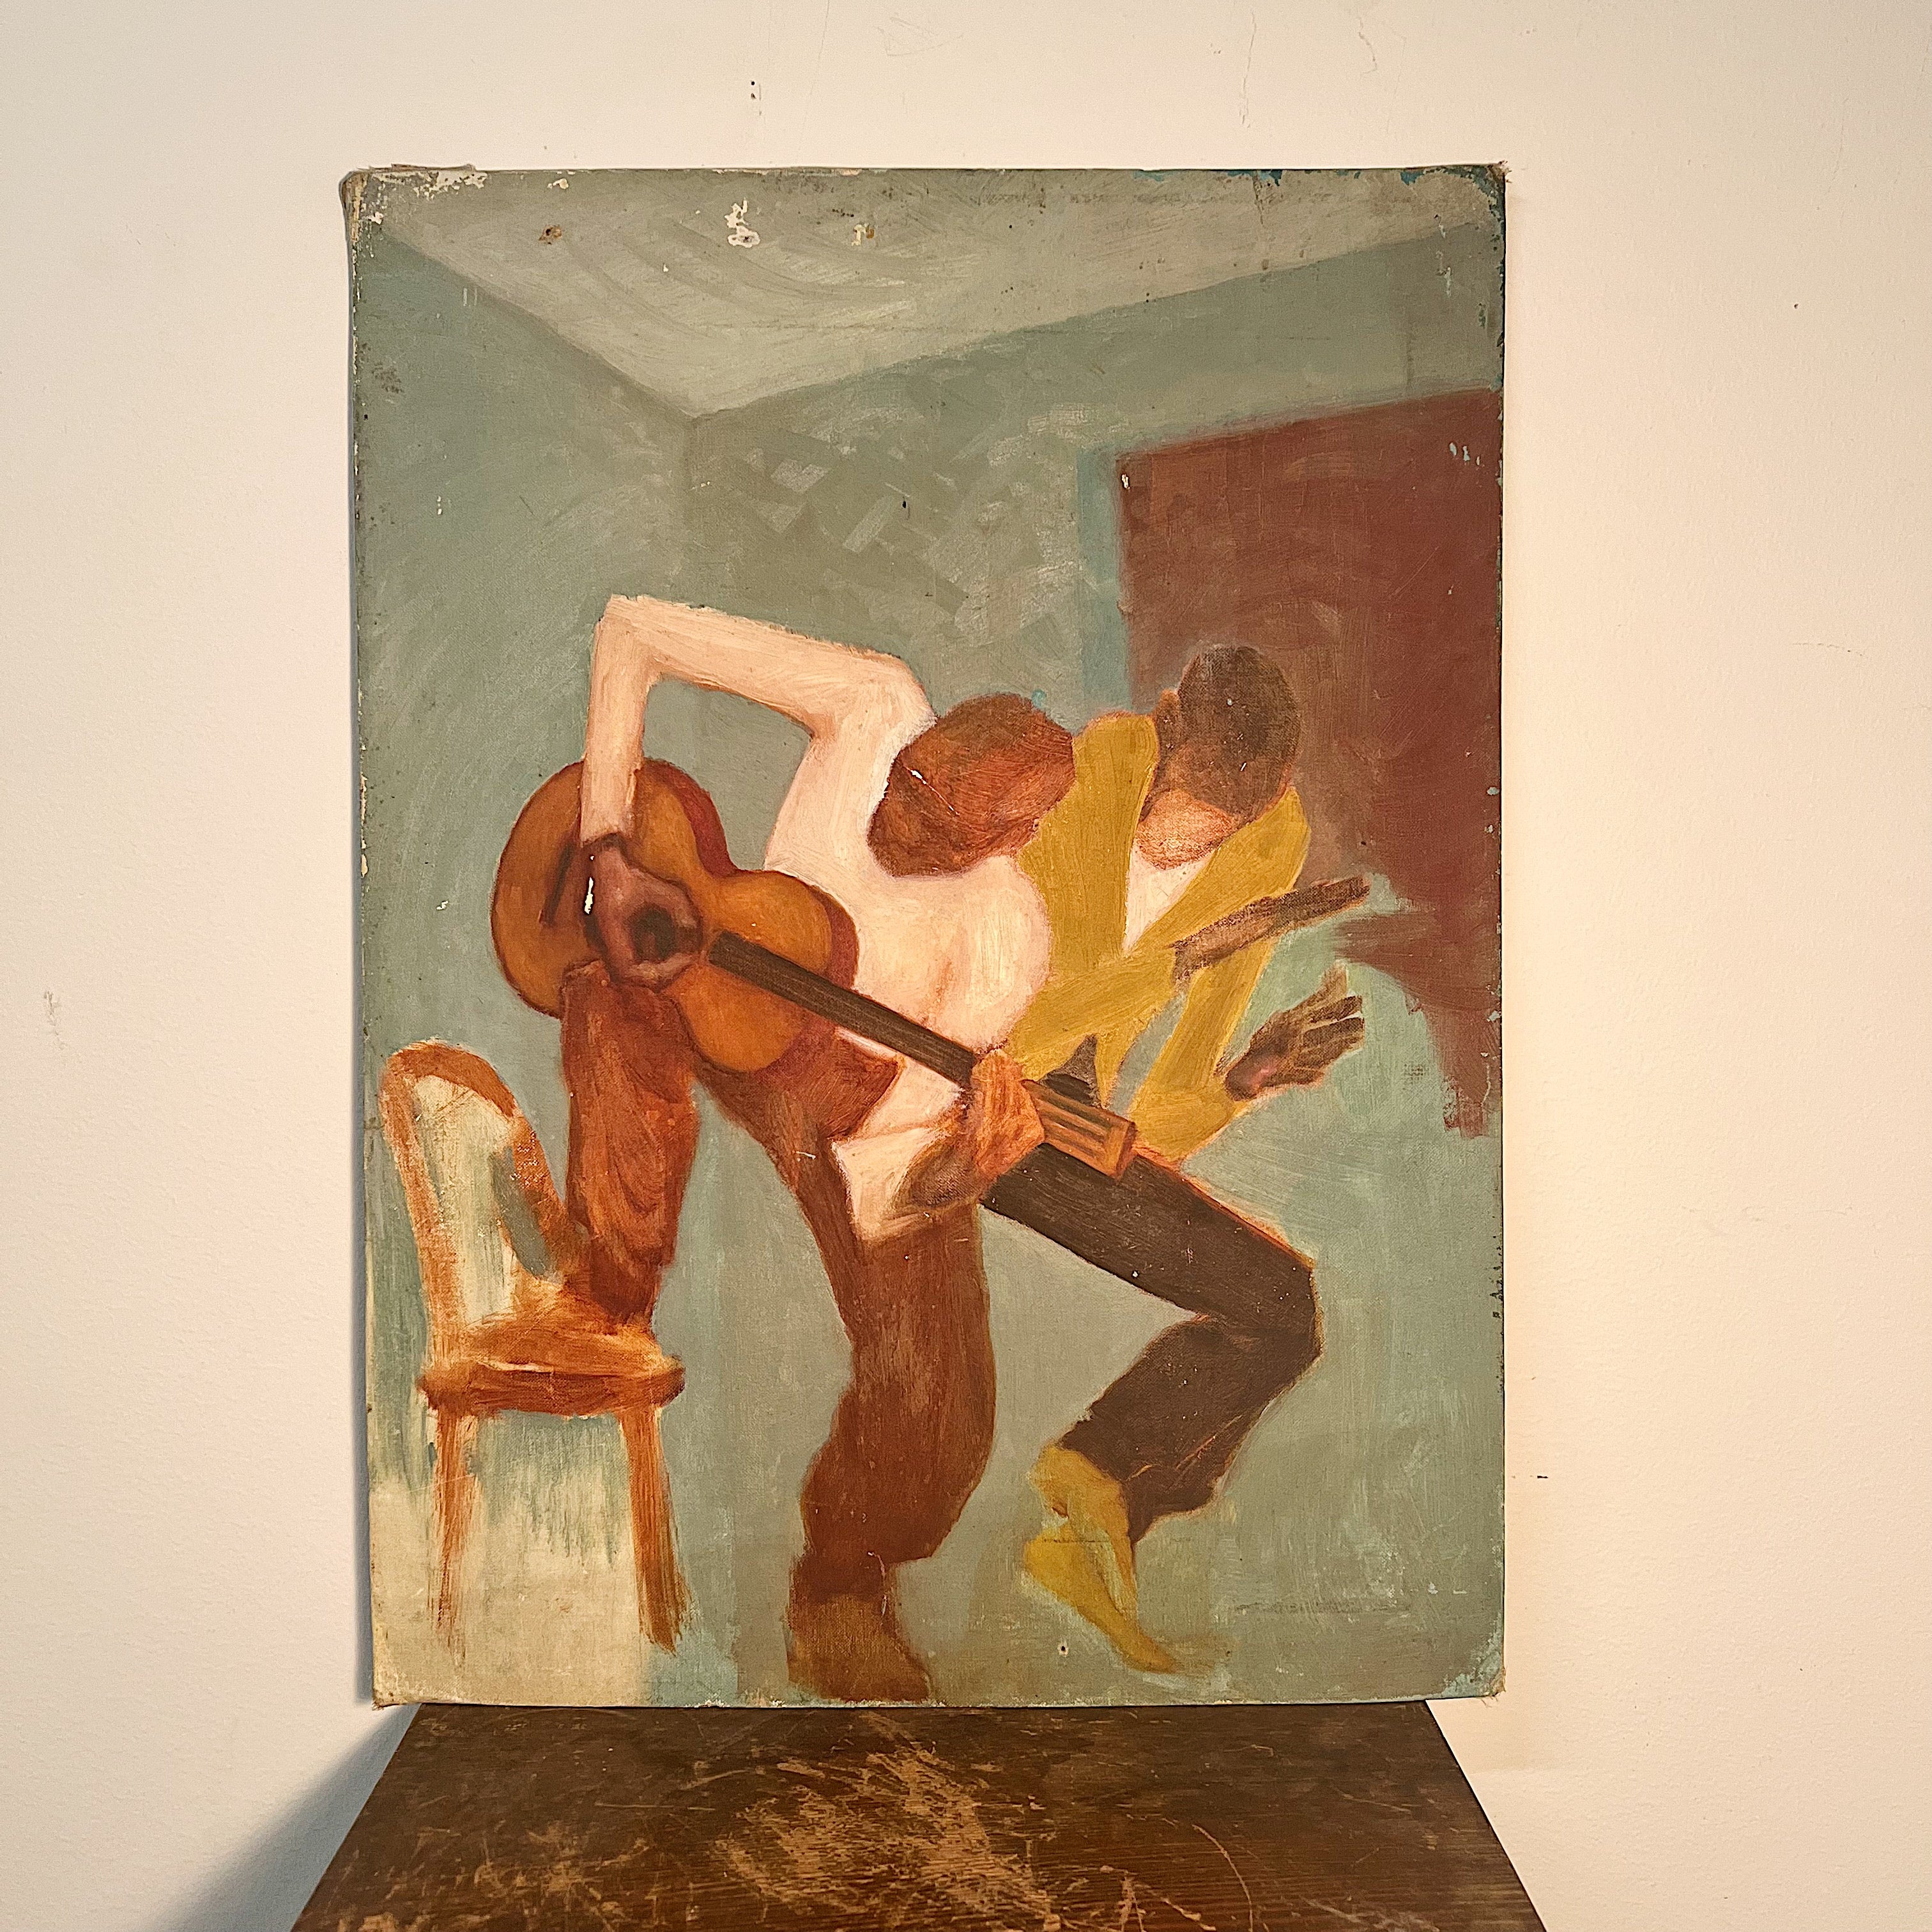 Rare1930s Harlem Renaissance Painting of Musician and Dancer - Rare WPA Era Blues Art- New York Historical Artwork - Robert Johnson Oil on Board